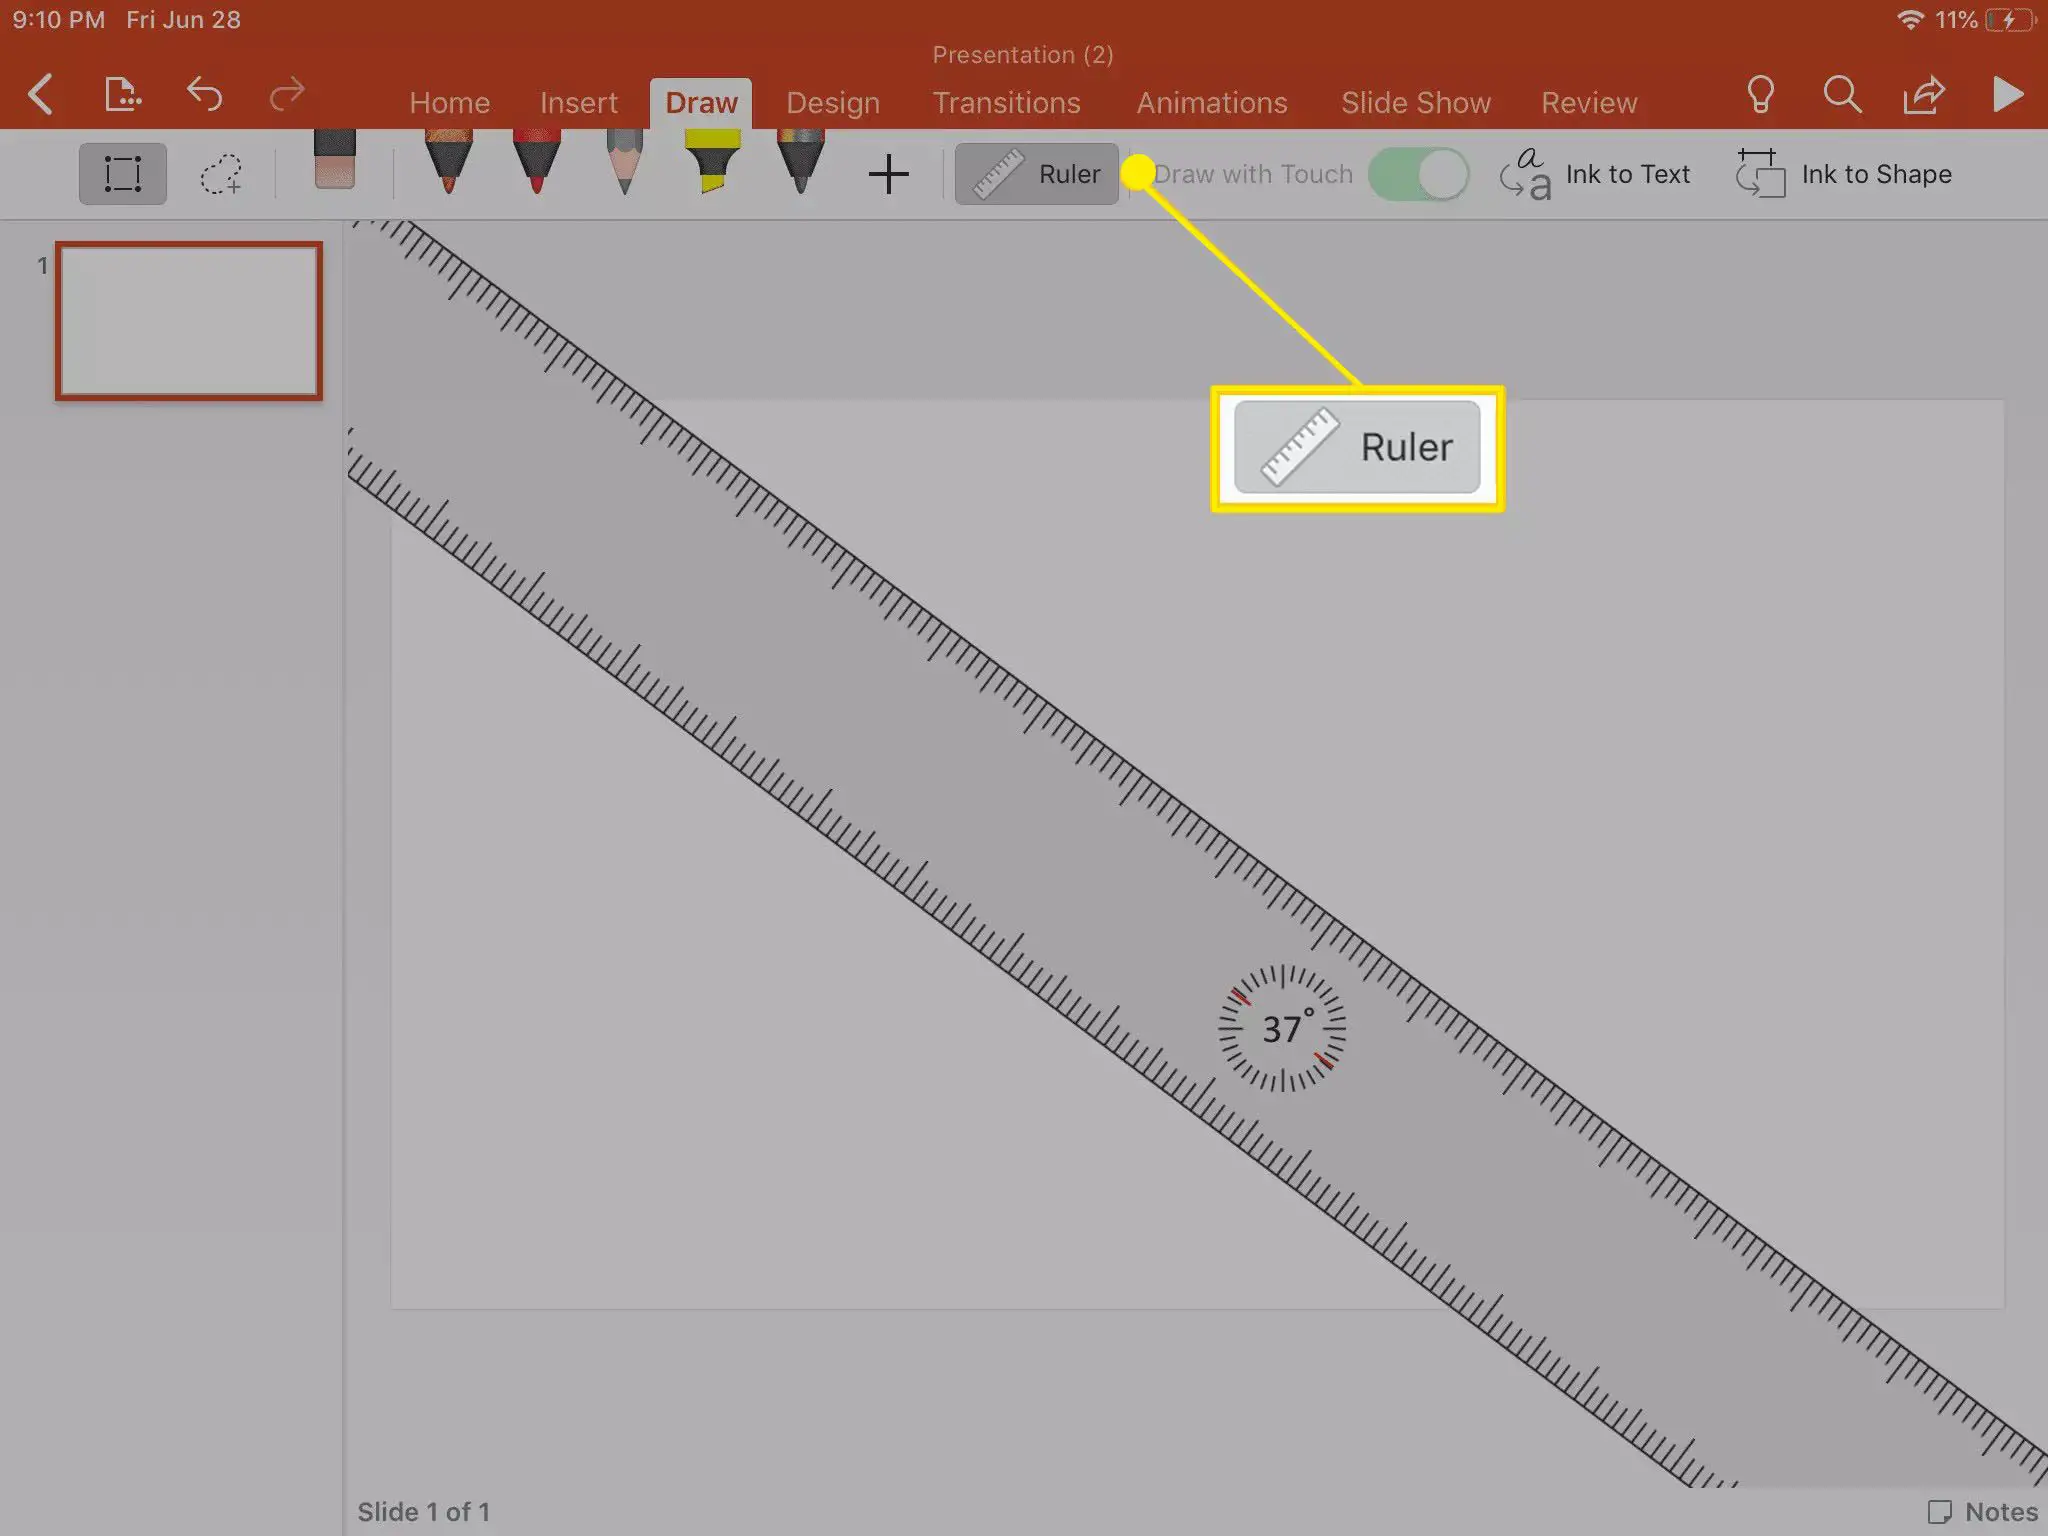 Visualizando a ferramenta Ruler dentro da ferramenta Draw no PowerPoint.